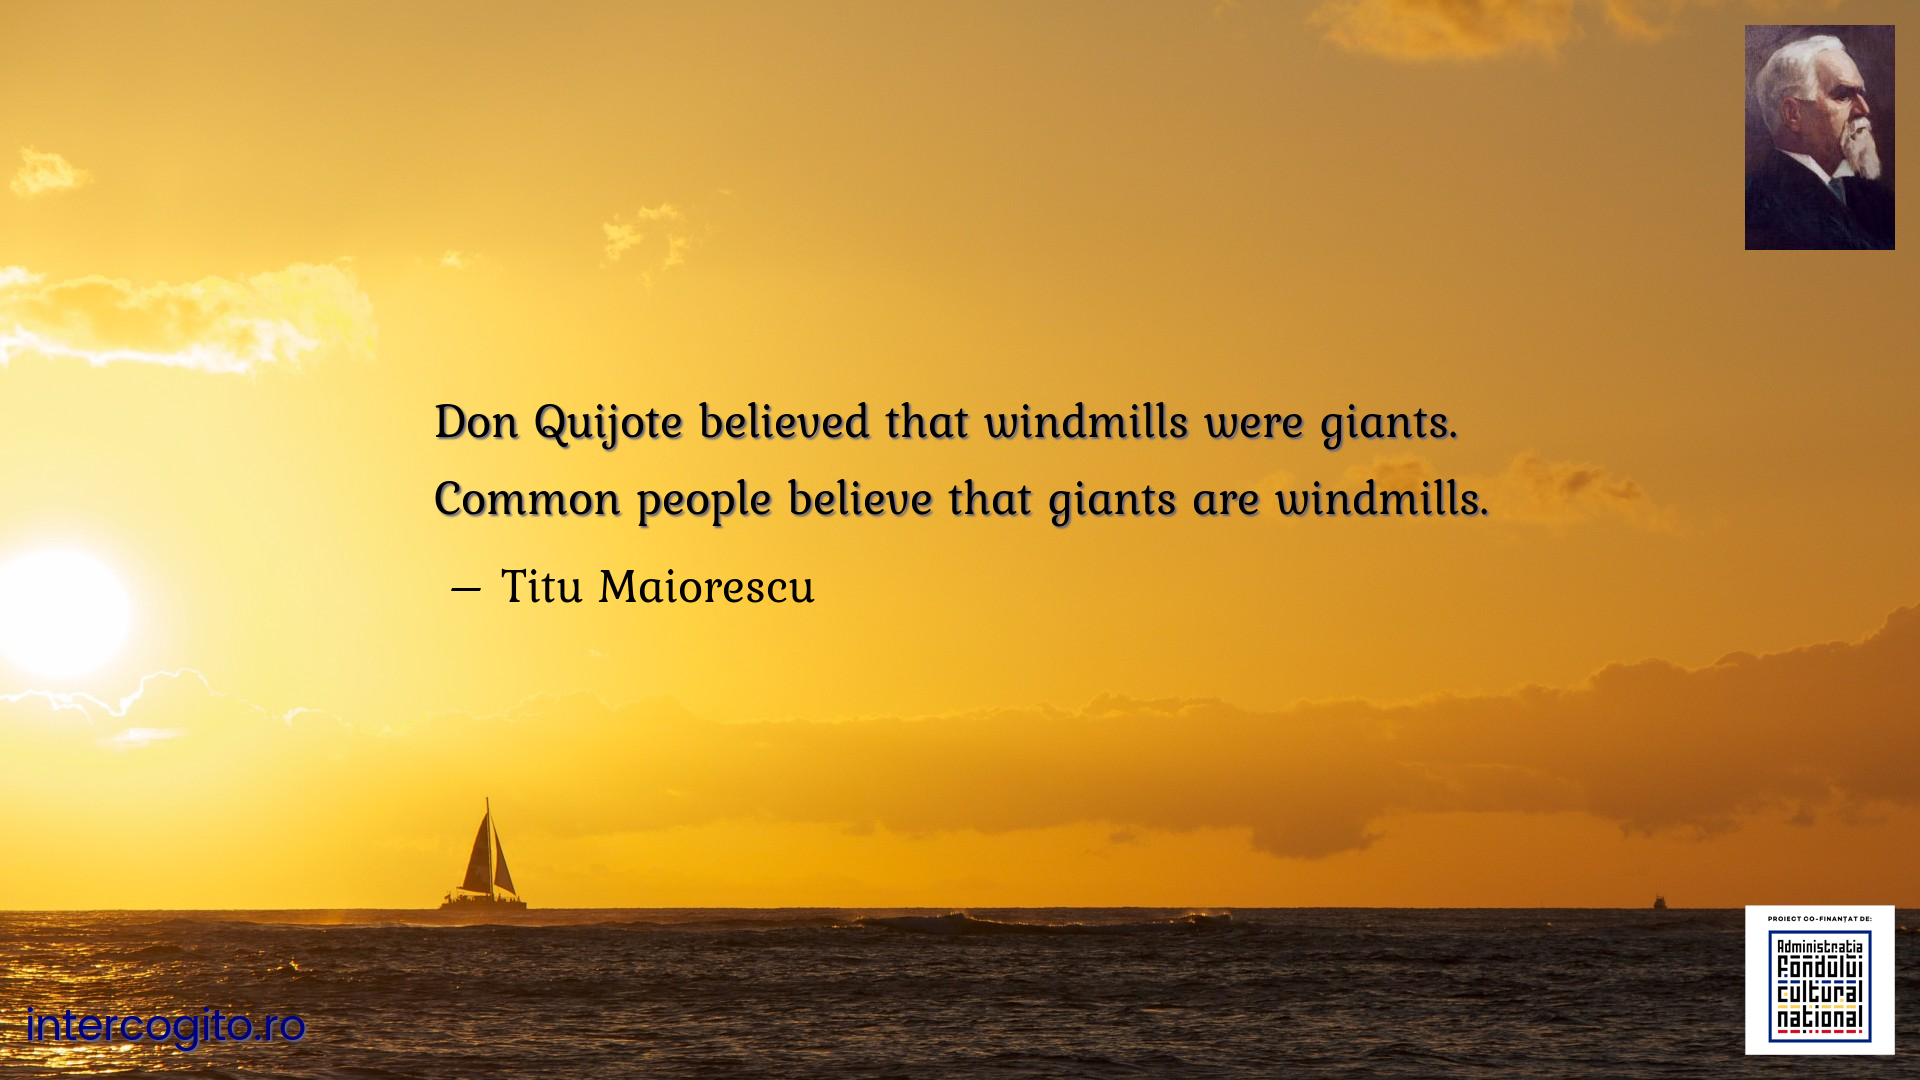 Don Quijote believed that windmills were giants. Common people believe that giants are windmills.